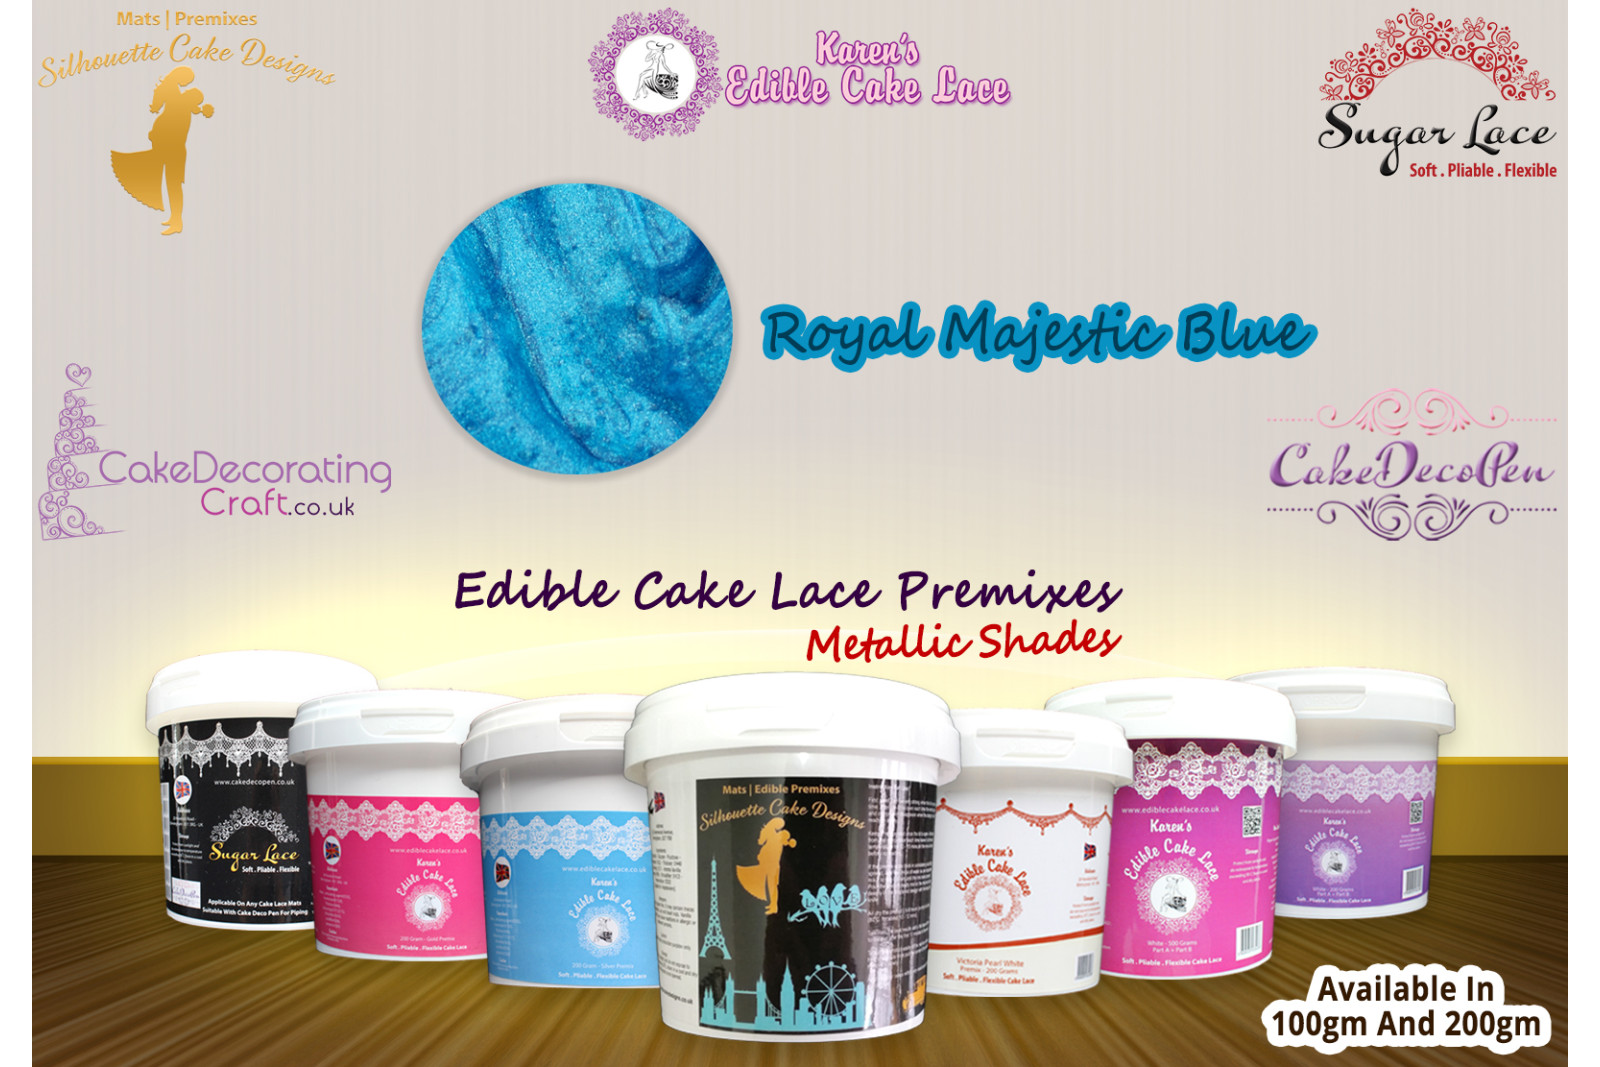 Royal Majestic Blue Colour | Silhouette Cake Design Premixes | Metallic Shade | 200 Grams